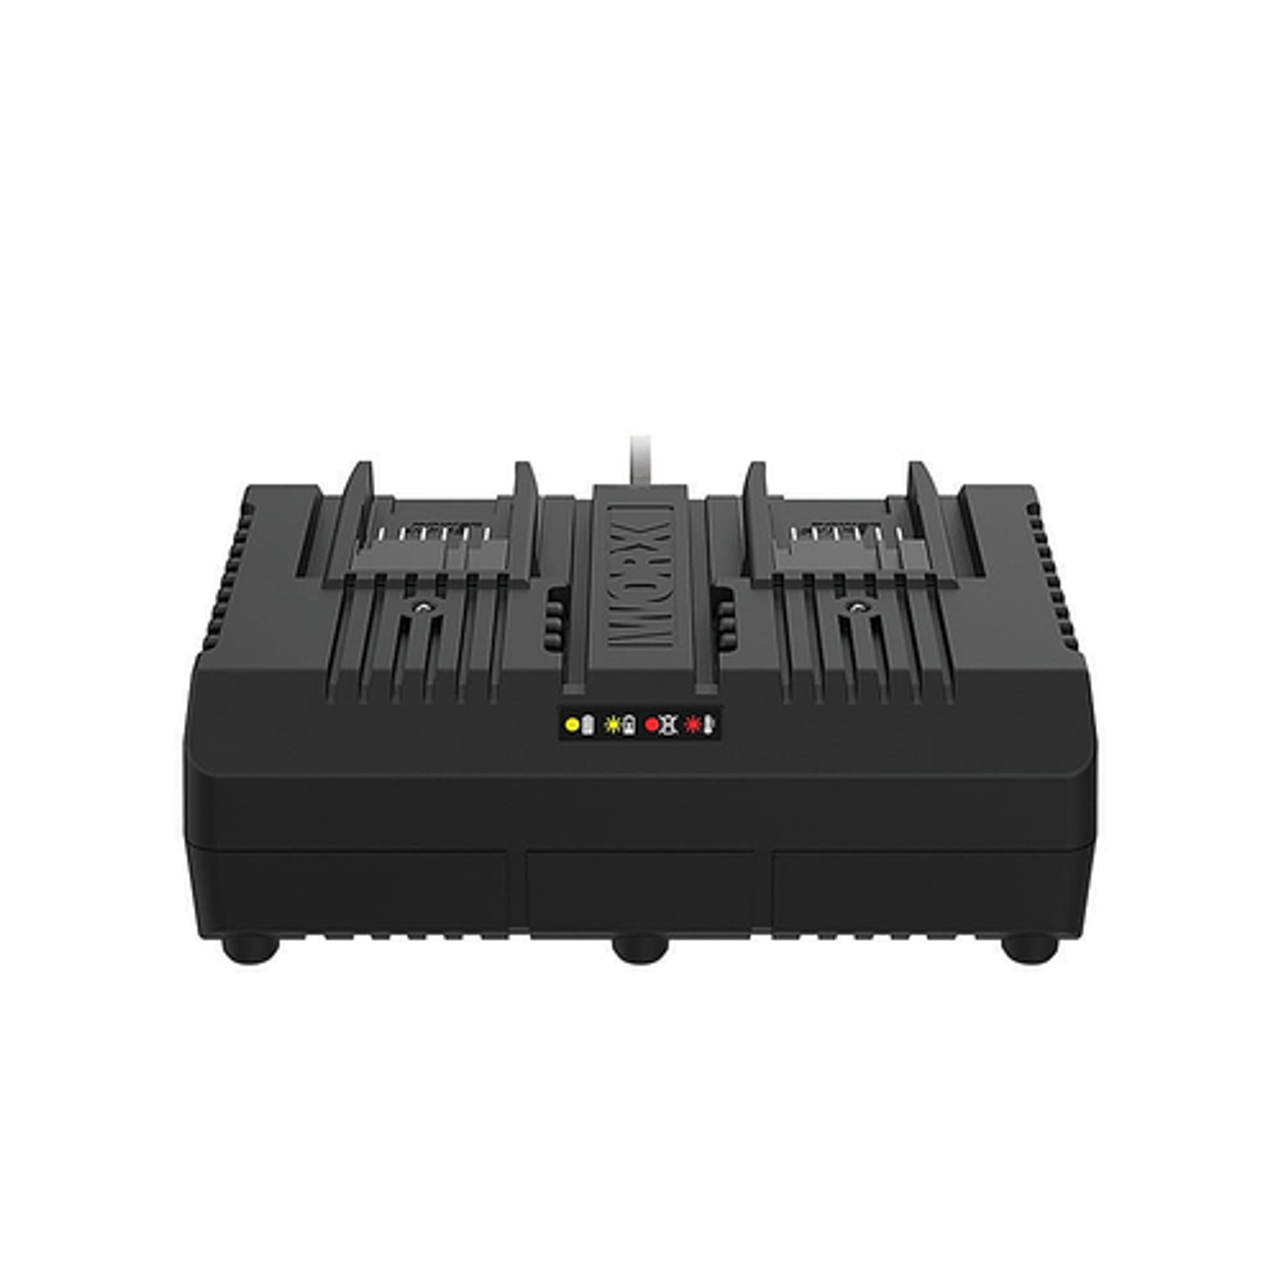 WORX - 20V Power Share Li-ion 1-Hour Dual Port Quick Charger - Black